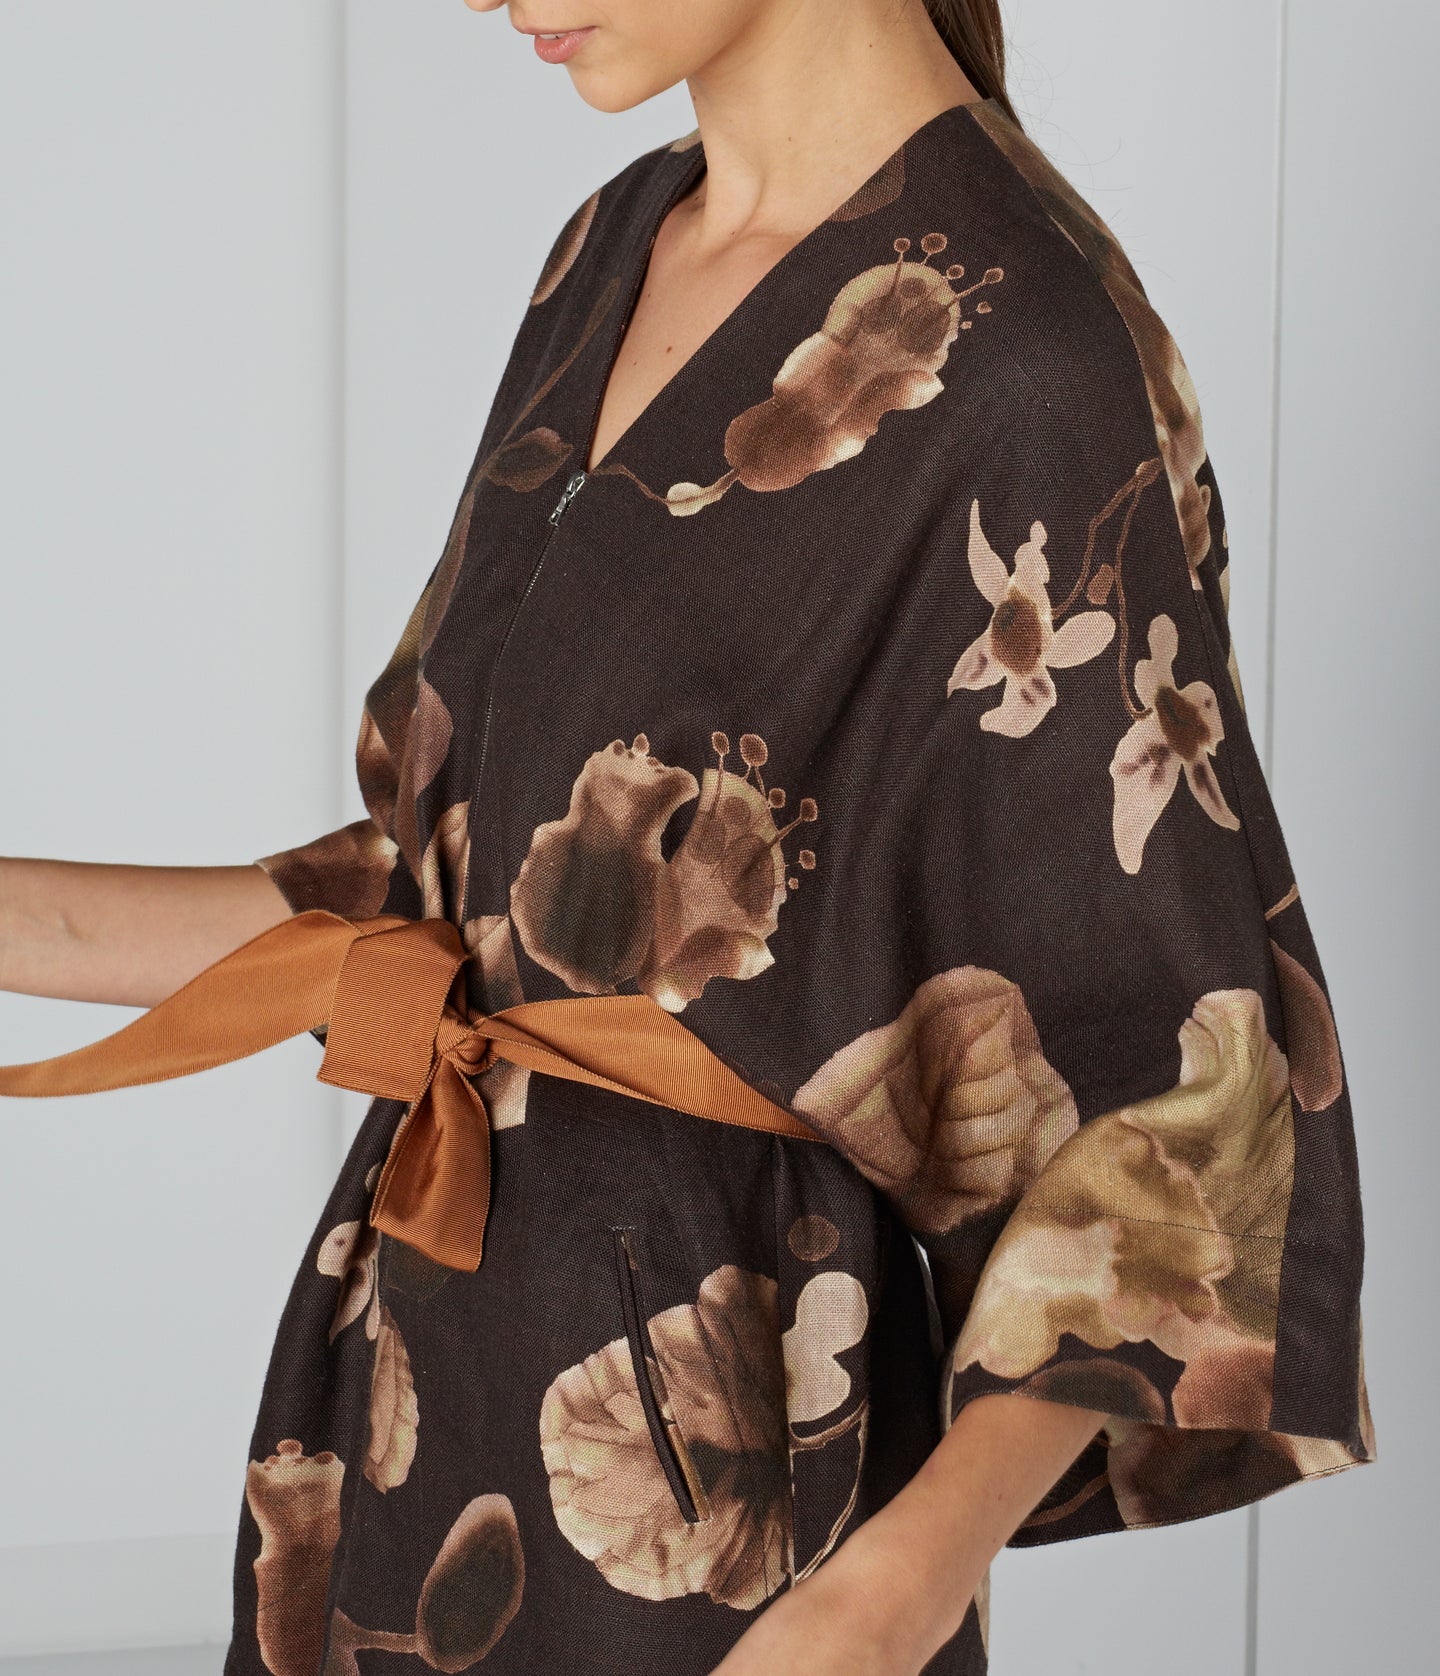 Terracotta ribbon belt on brown floral kimono dress - Darby Scott